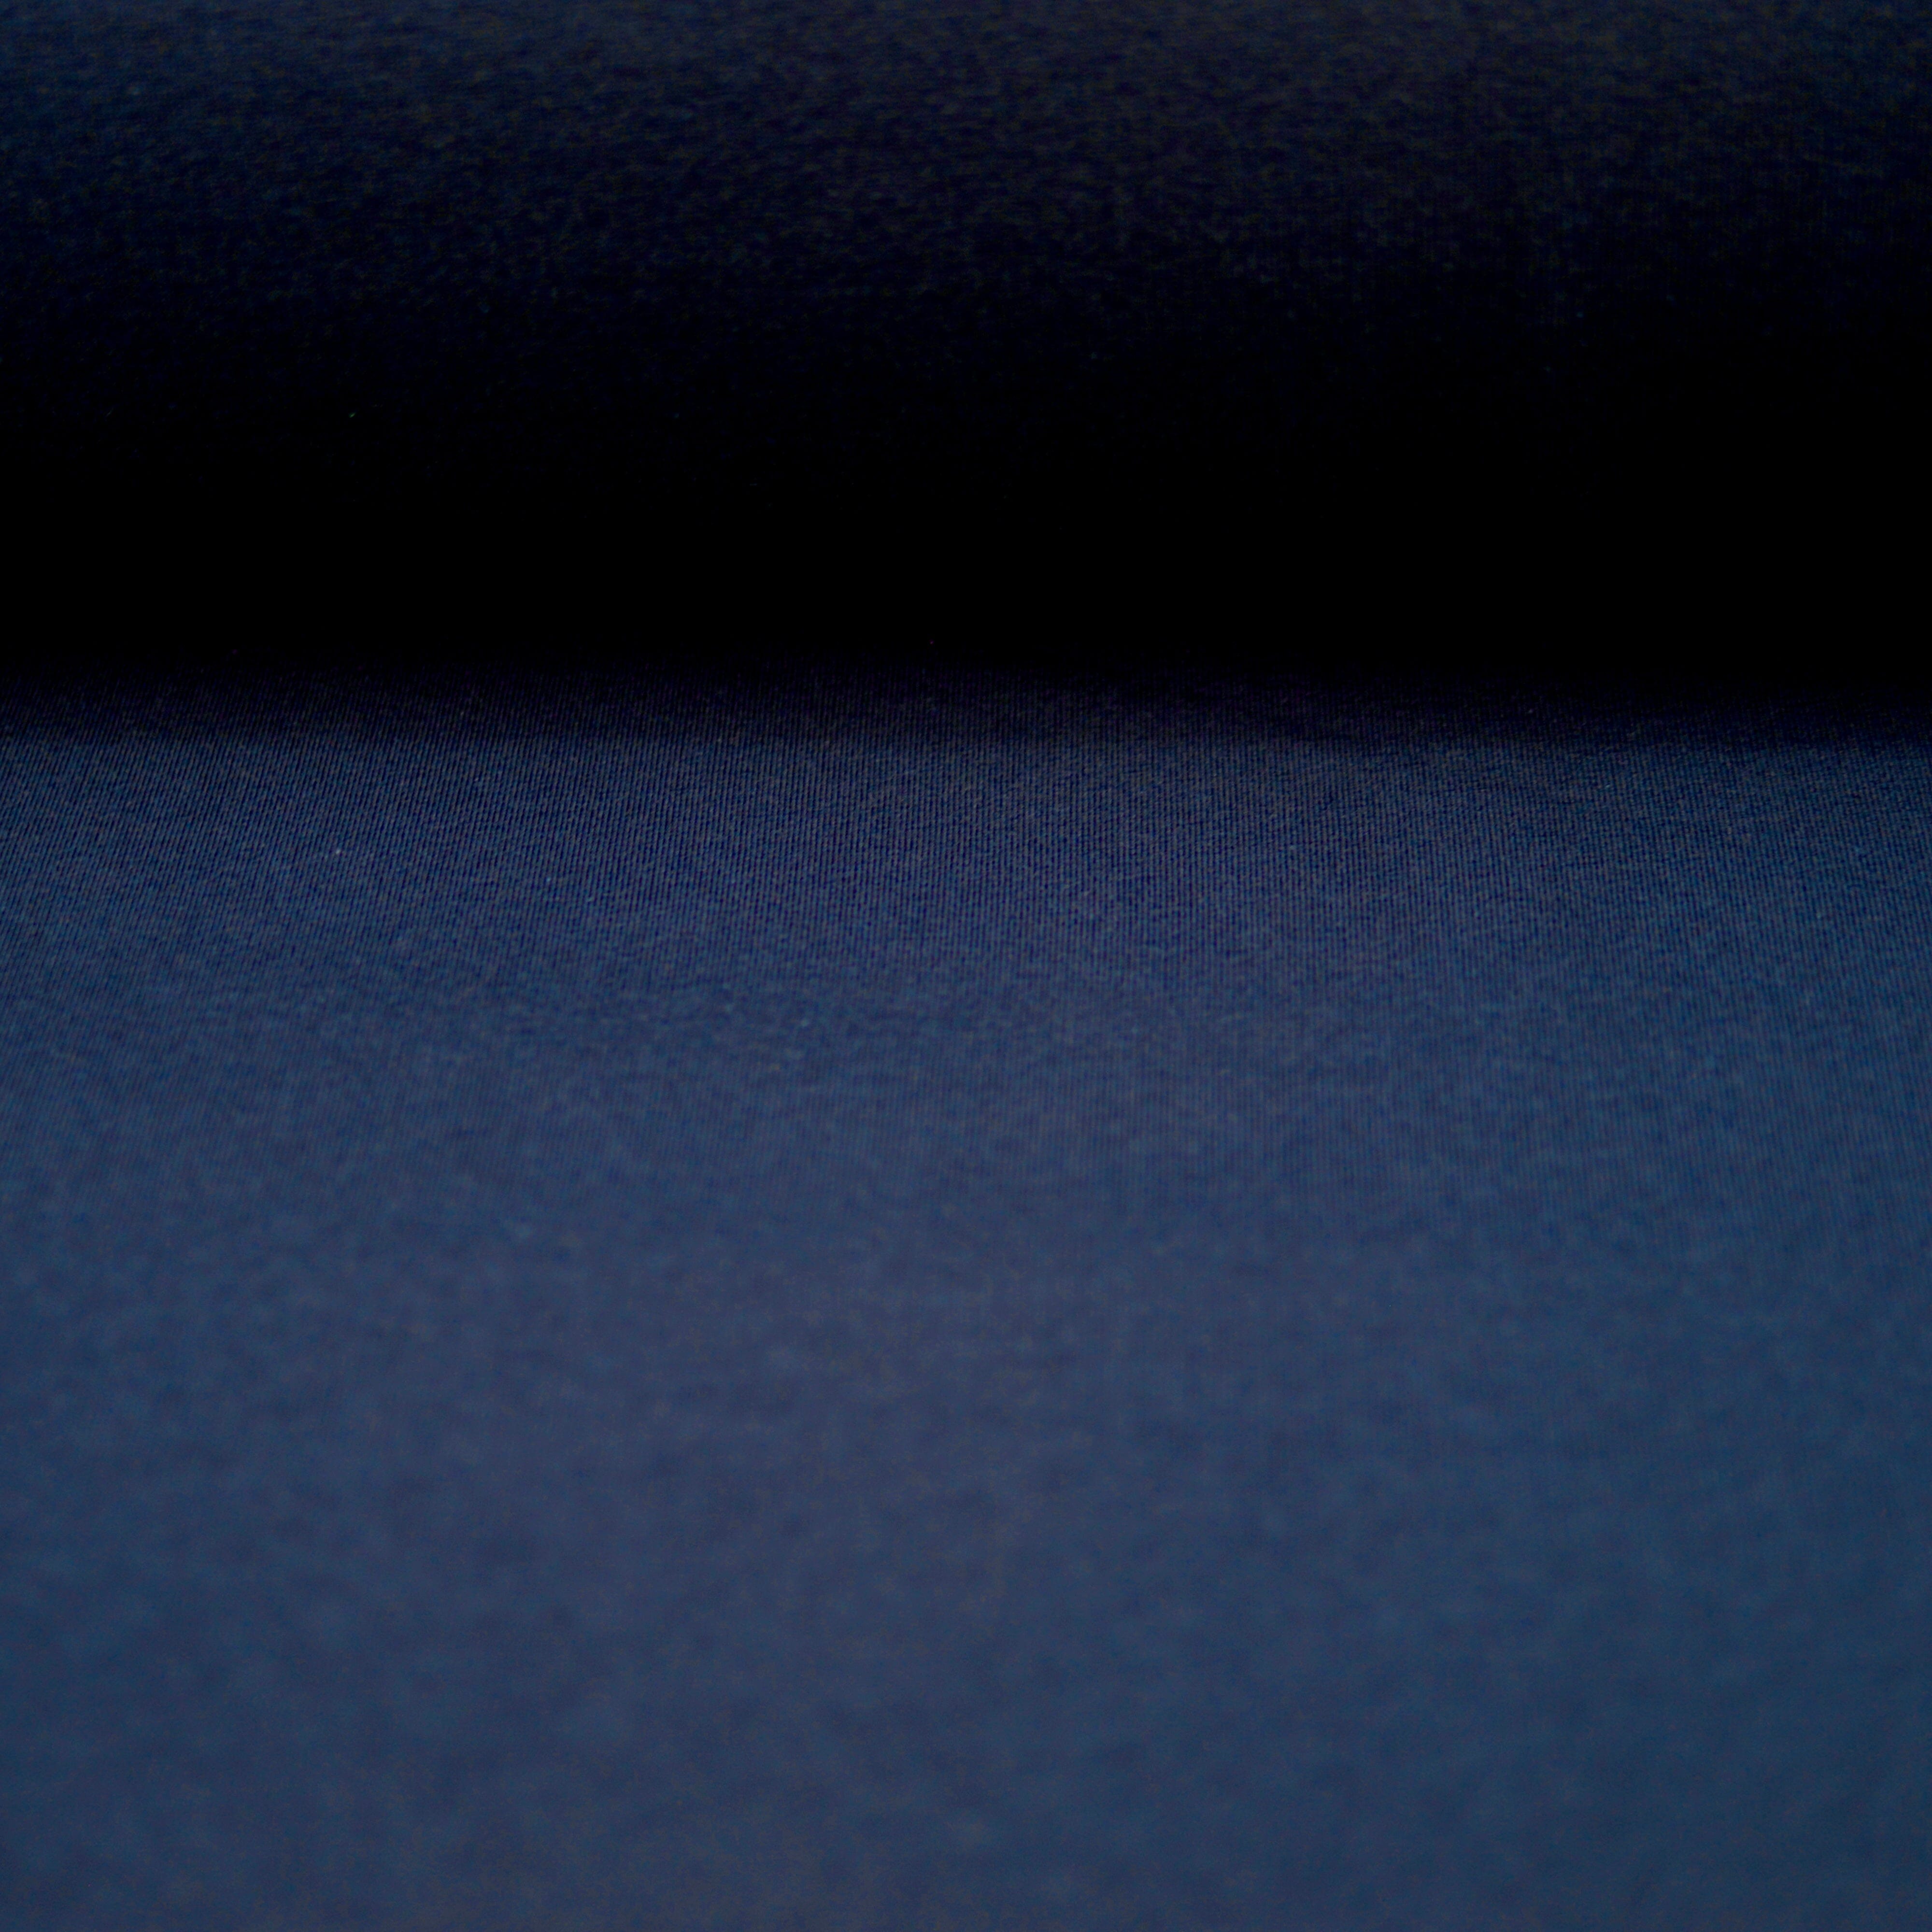 Sweatstoff - dunkelblau marine Fabric poshpinks